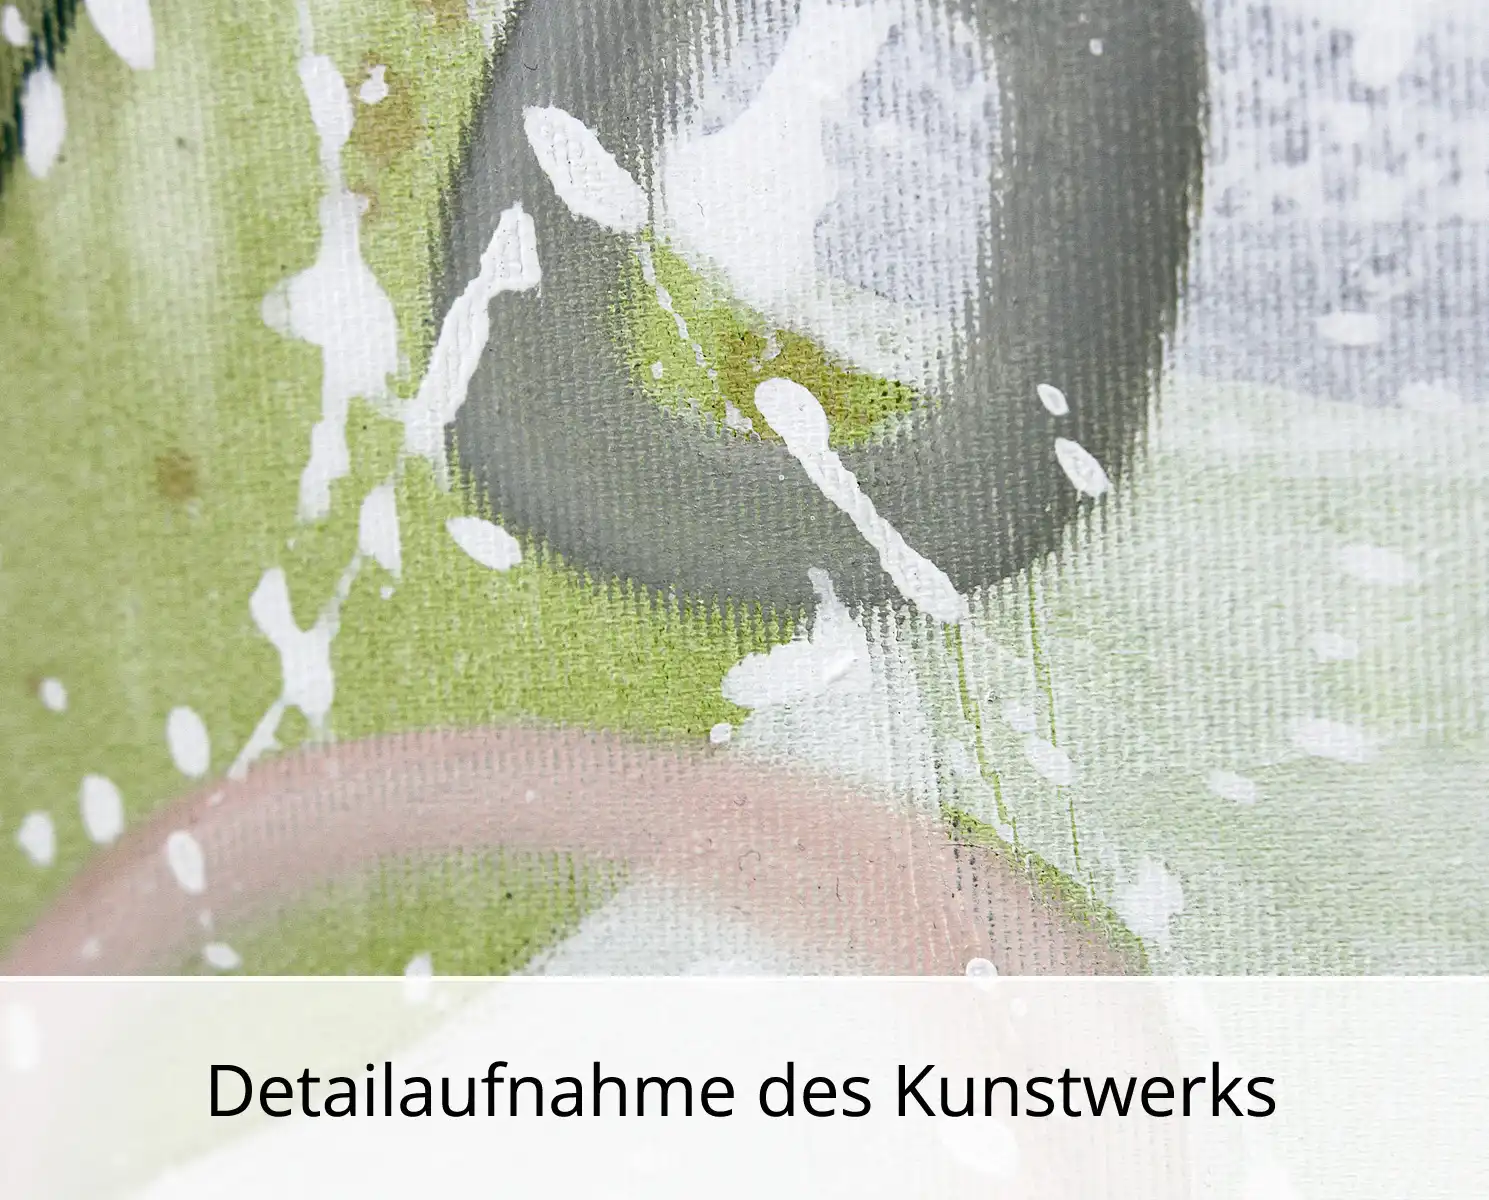 M.Kühne: "Gedankenspiel", modernes Originalgemälde (Unikat)